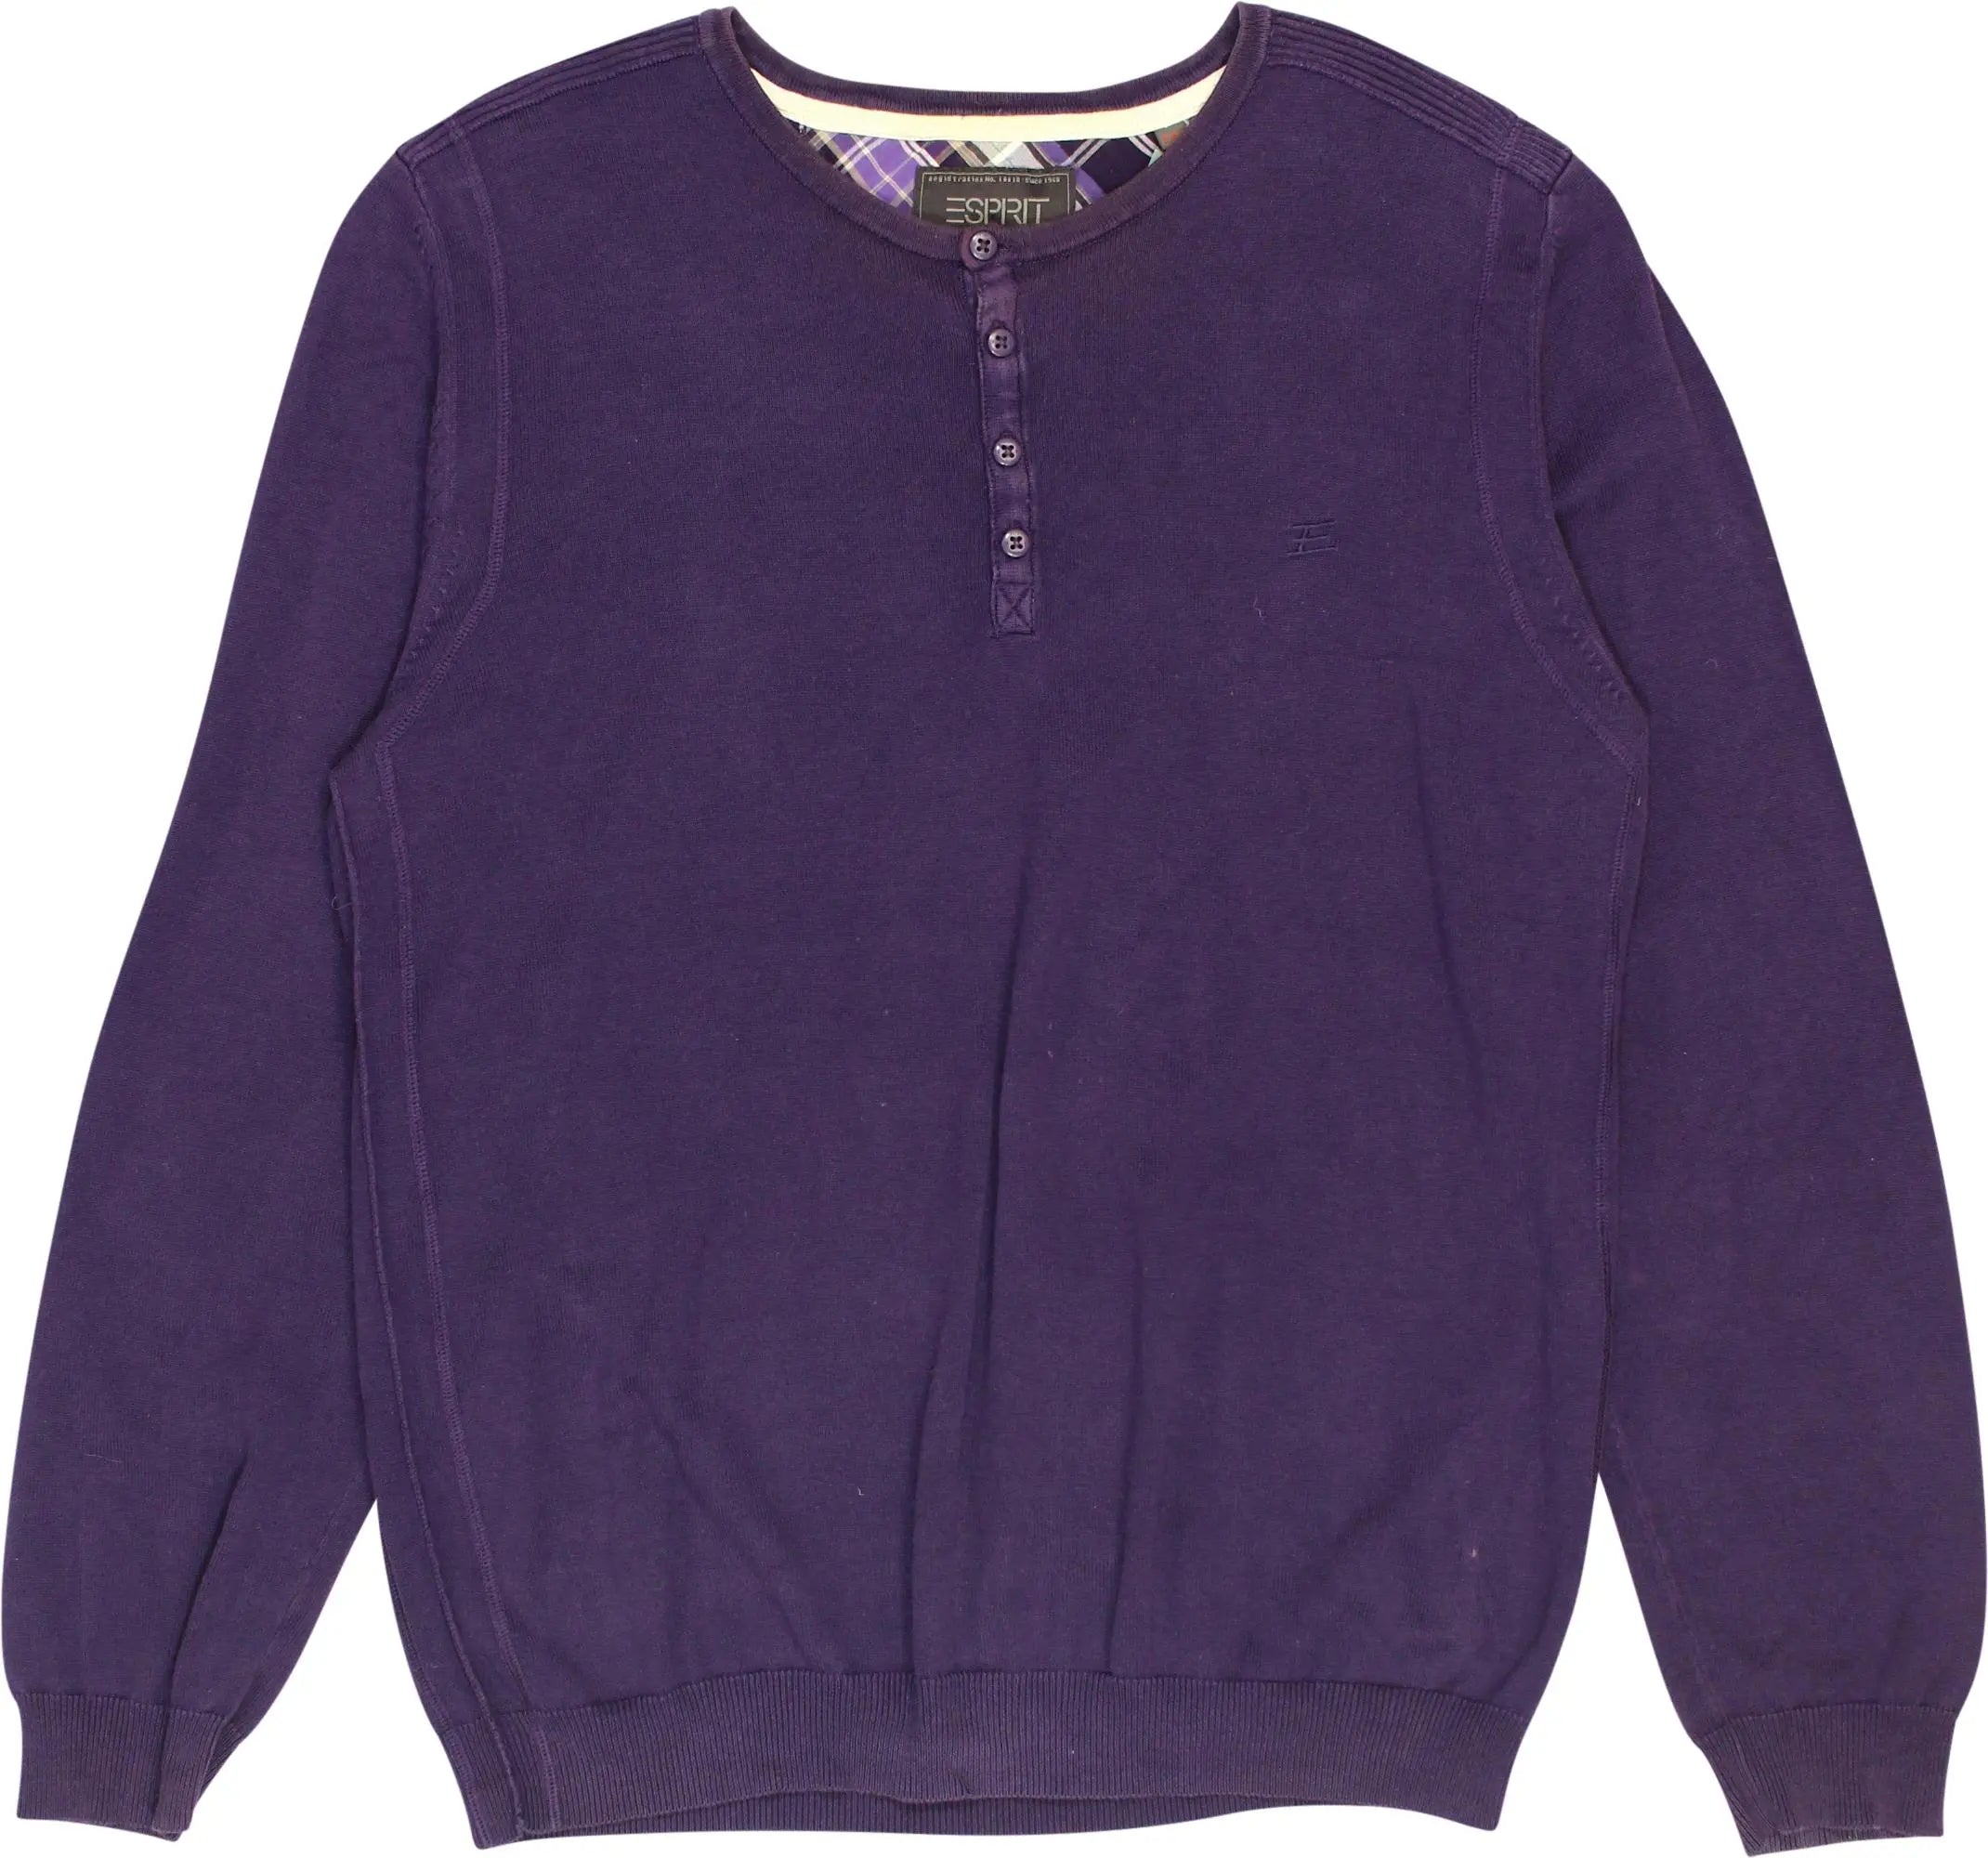 Esprit - Purple Quarter Neck Jumper- ThriftTale.com - Vintage and second handclothing